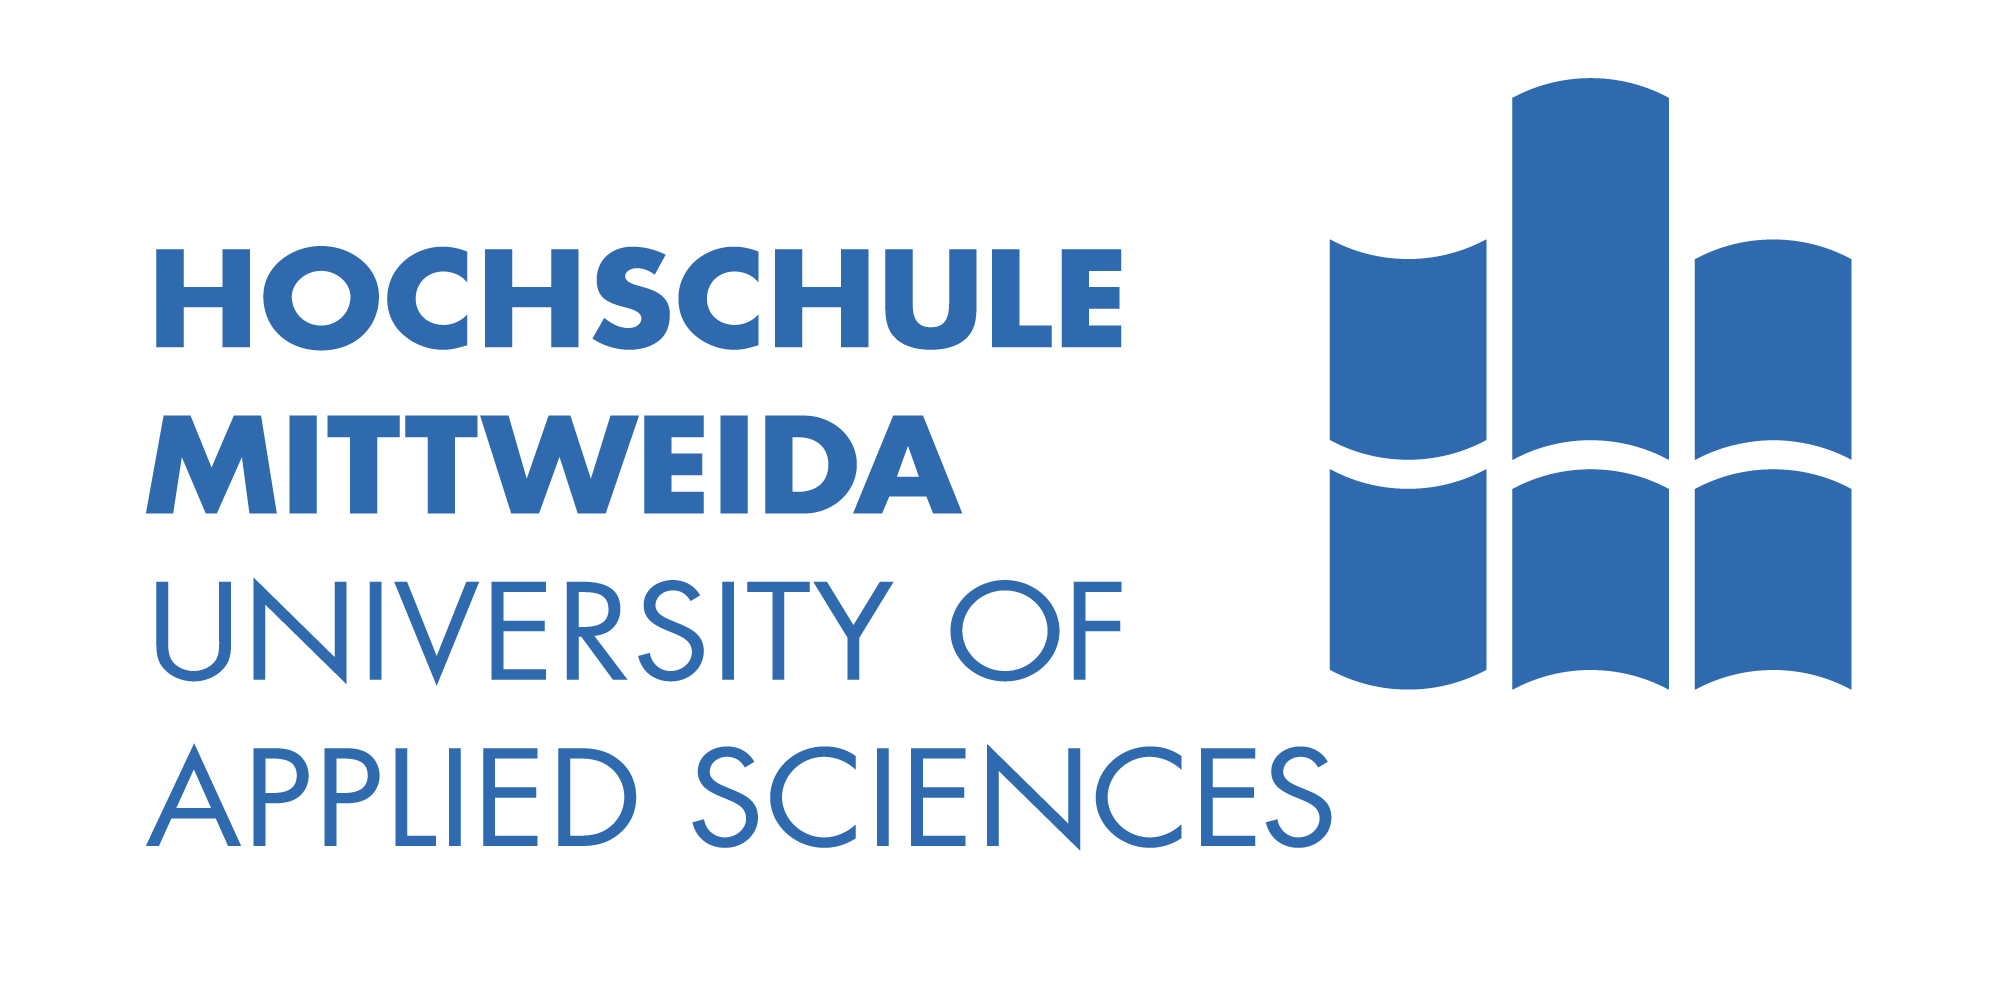 Hochschule Mittweida Logo photo - 1